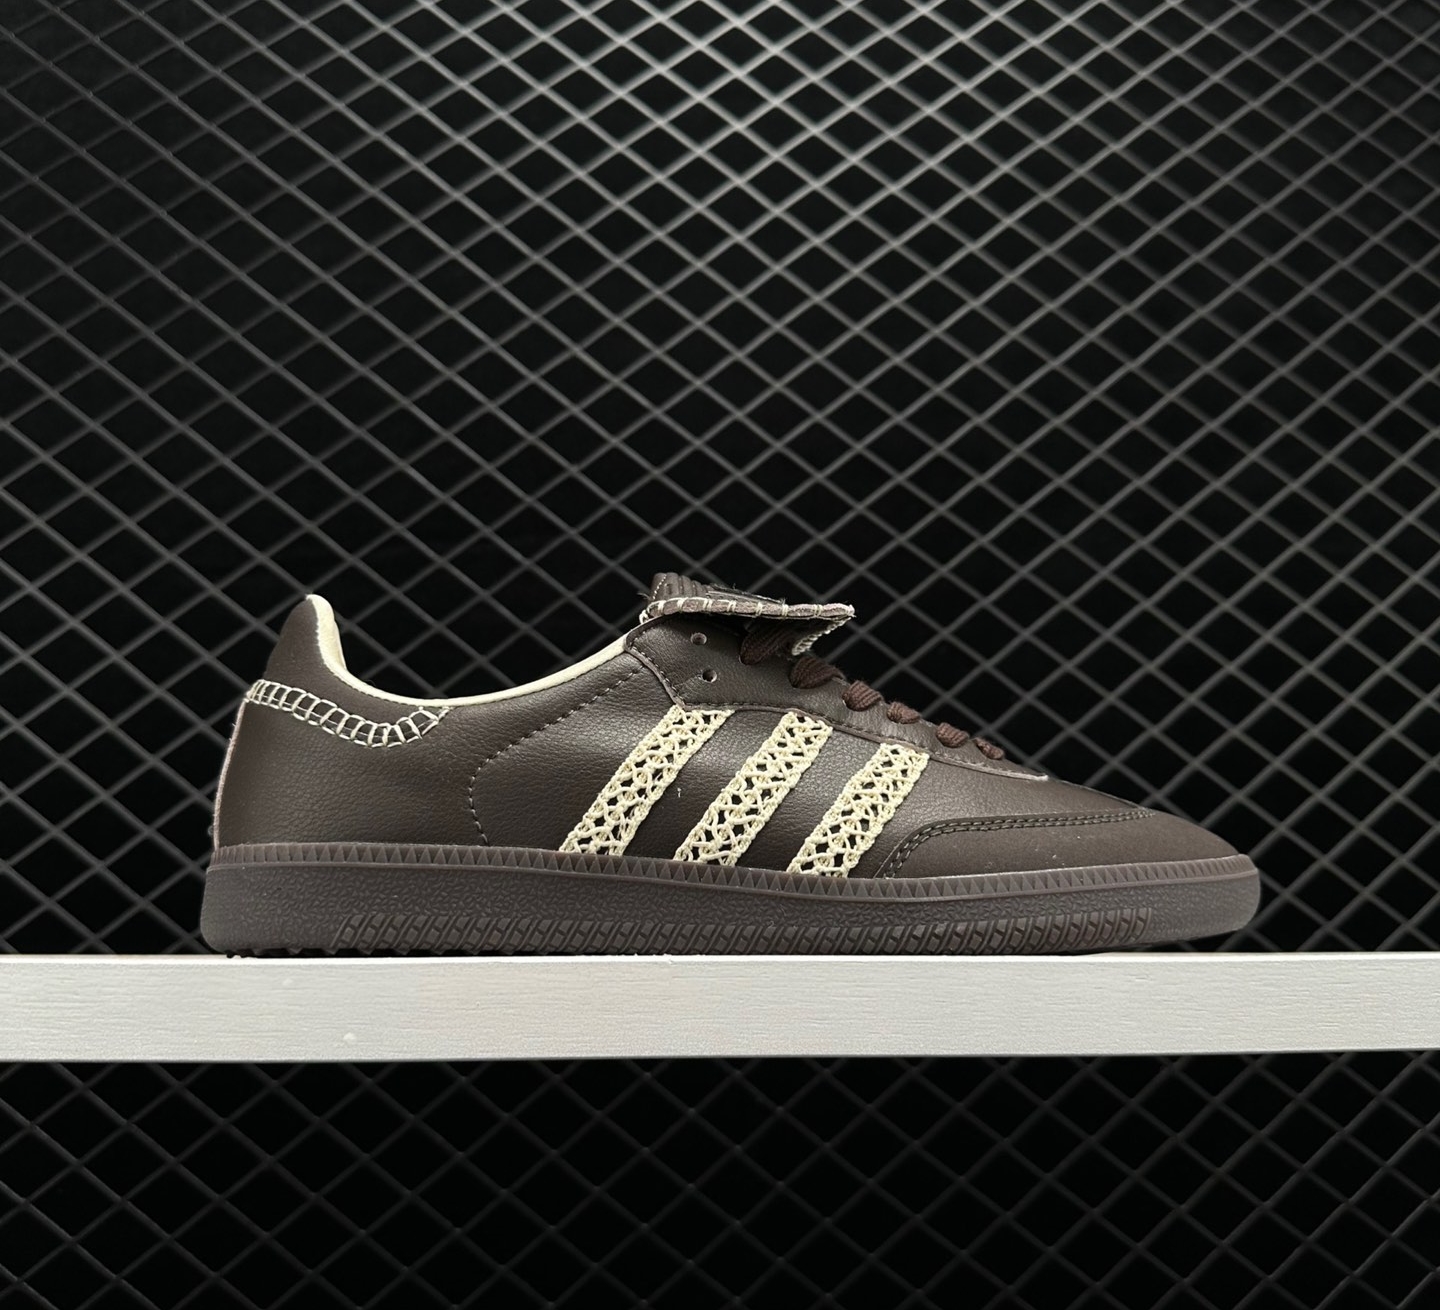 Adidas Wales Bonner x Samba 'Black' FX7517 - Limited Edition Collaboration